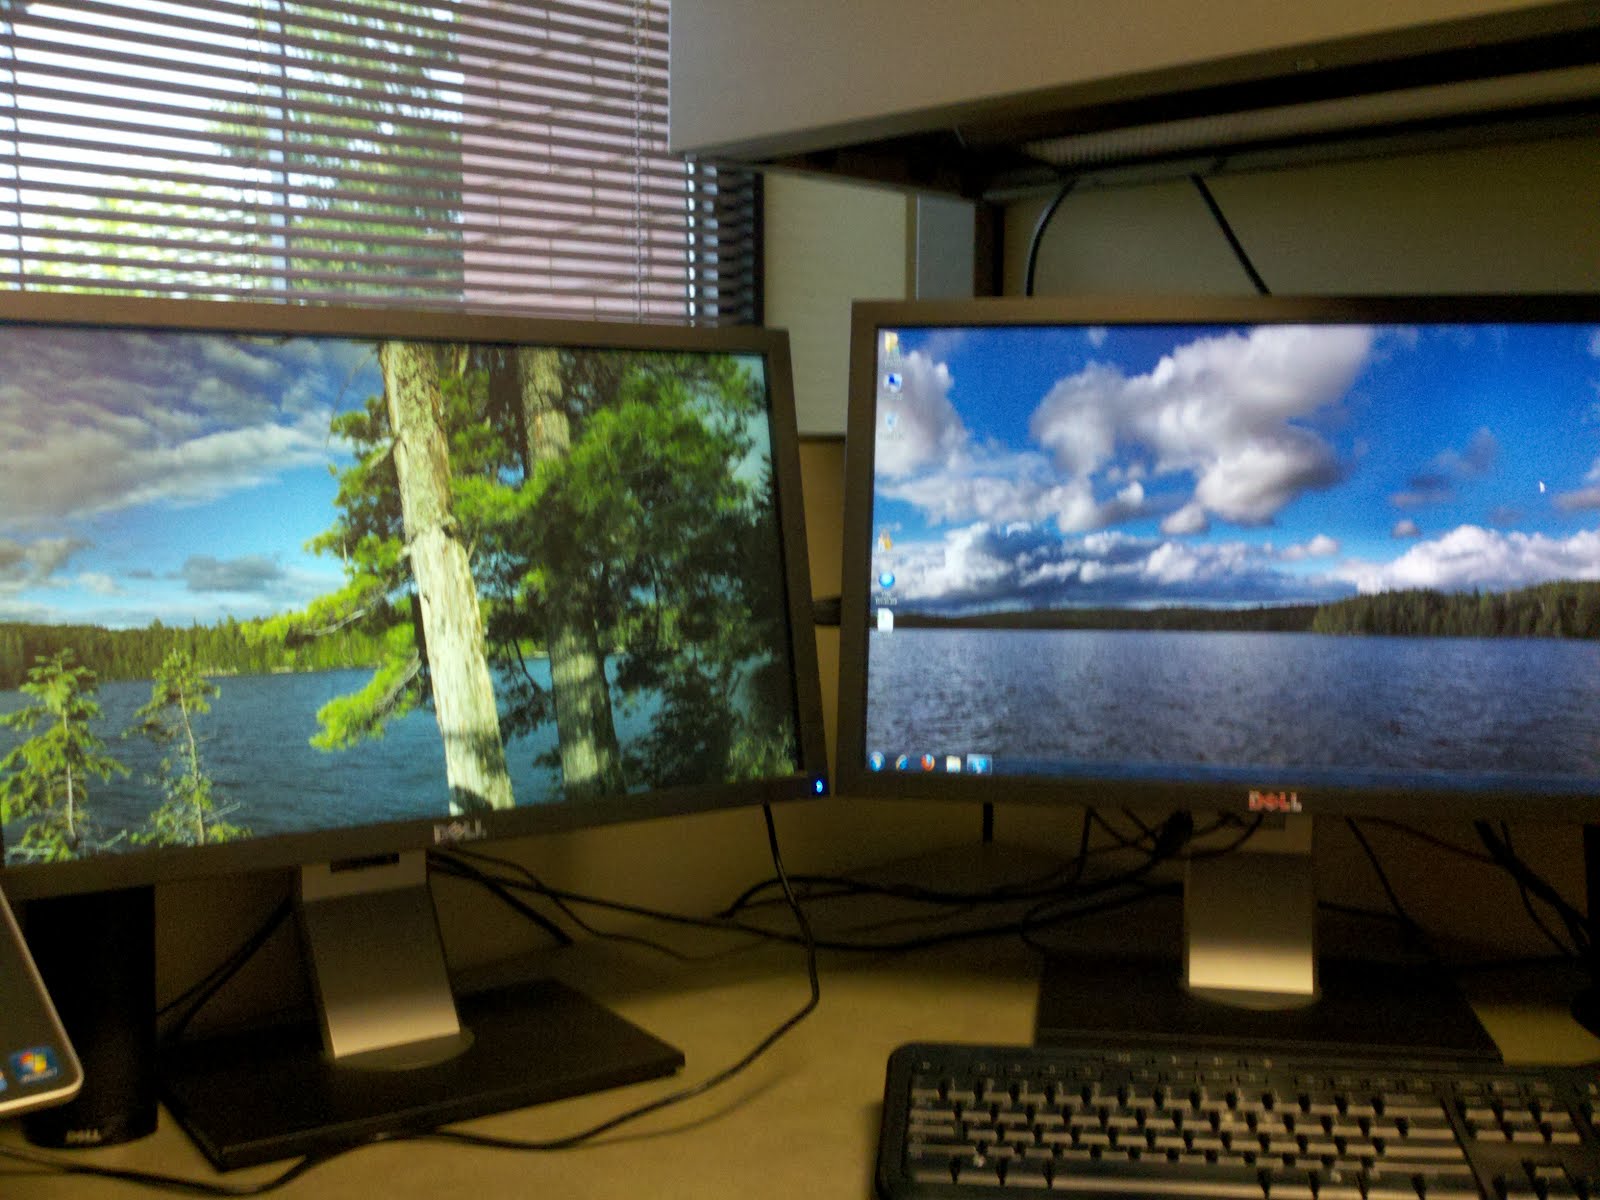 Windows Wallpaper On Monitors For Desktop